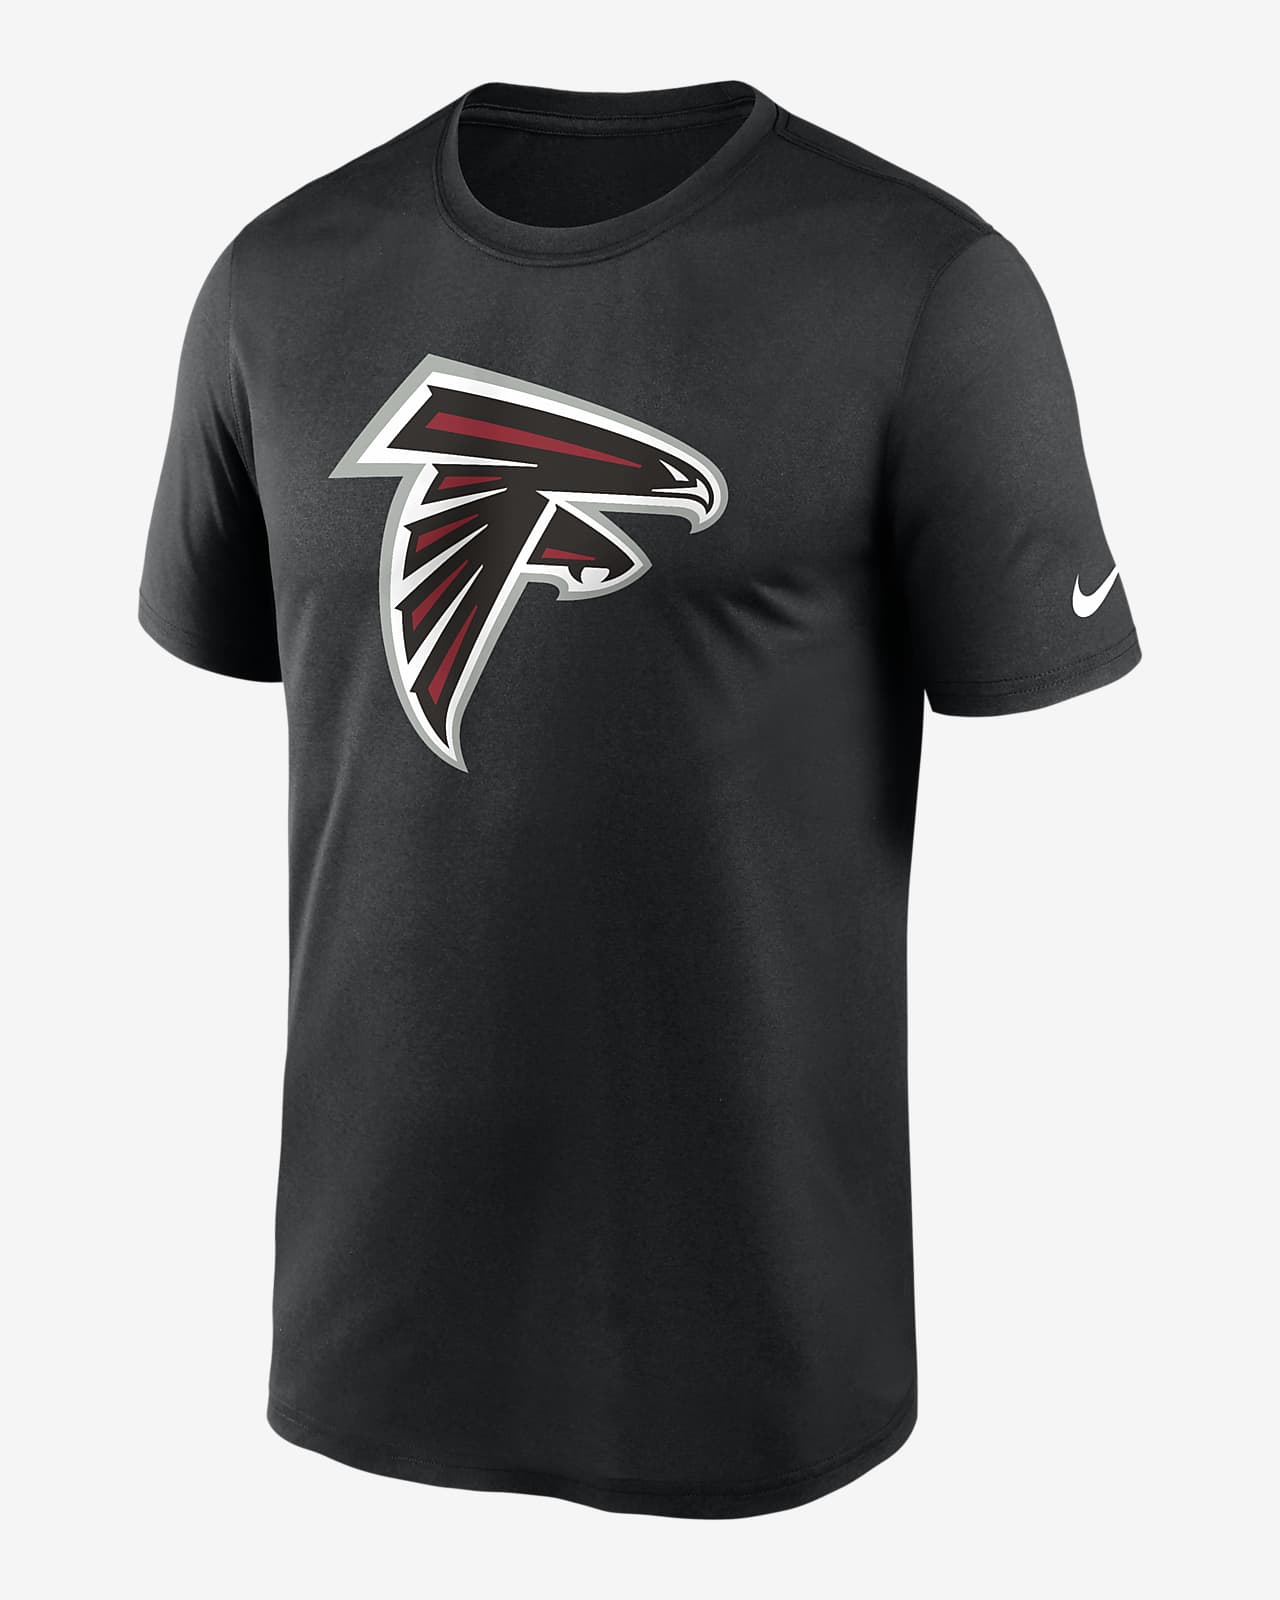 Nike Dri-FIT Logo Legend (NFL Atlanta Falcons) Men's T-Shirt